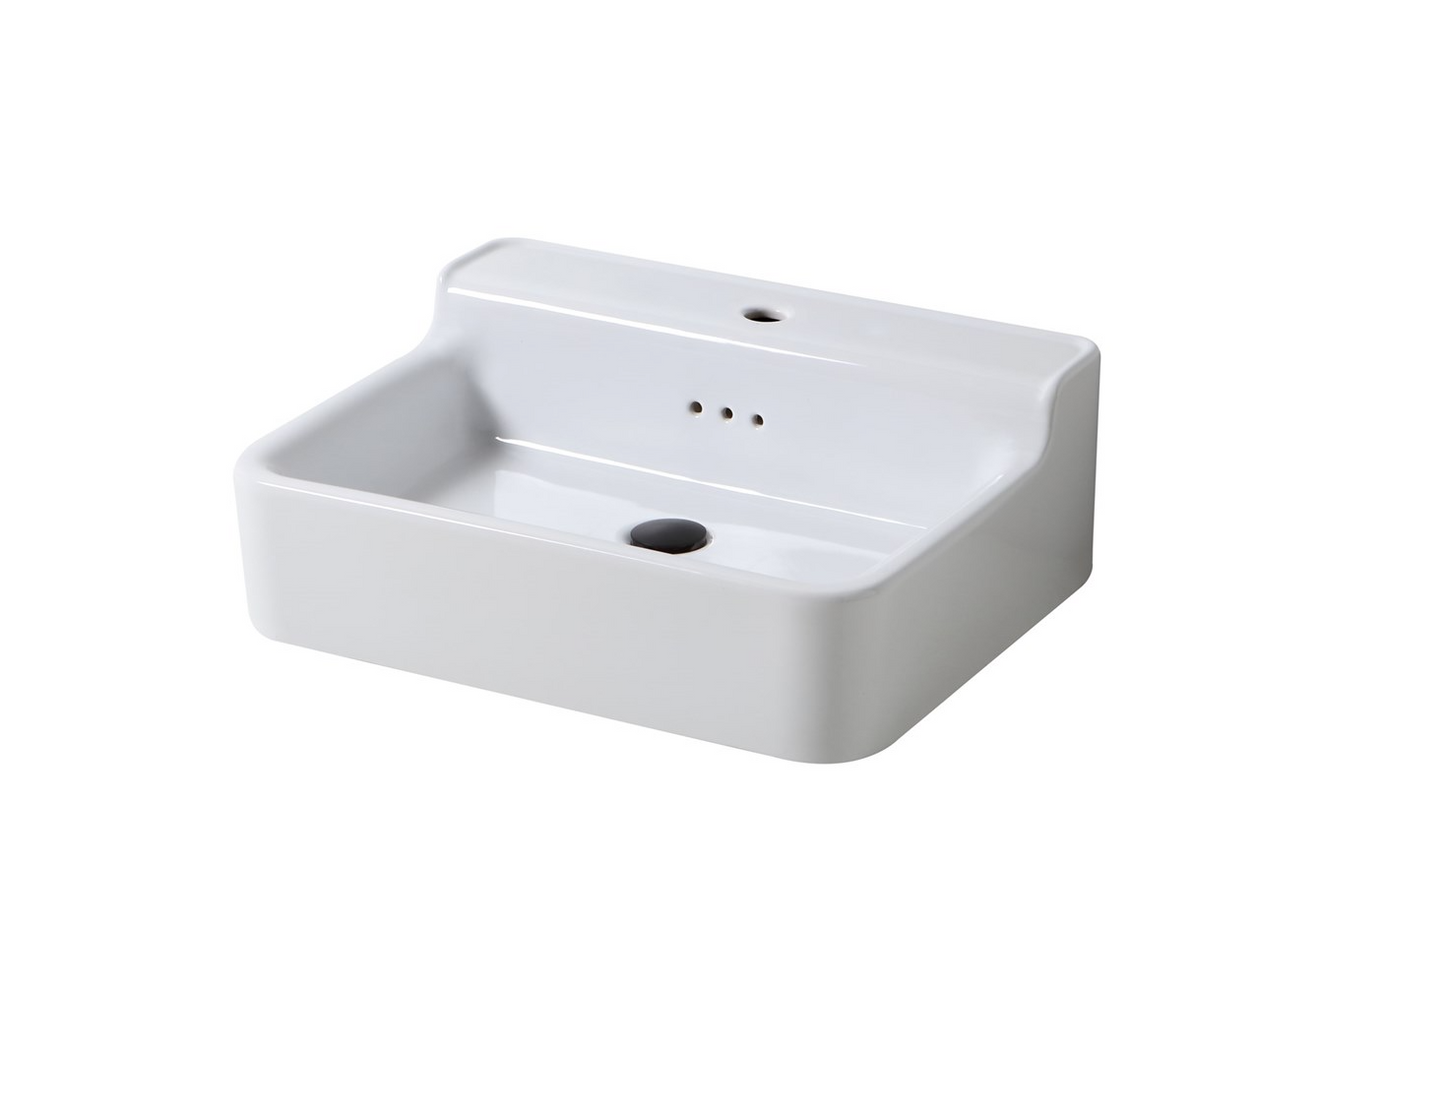 Industrialis countertop ceramic washbasin in Industrial style